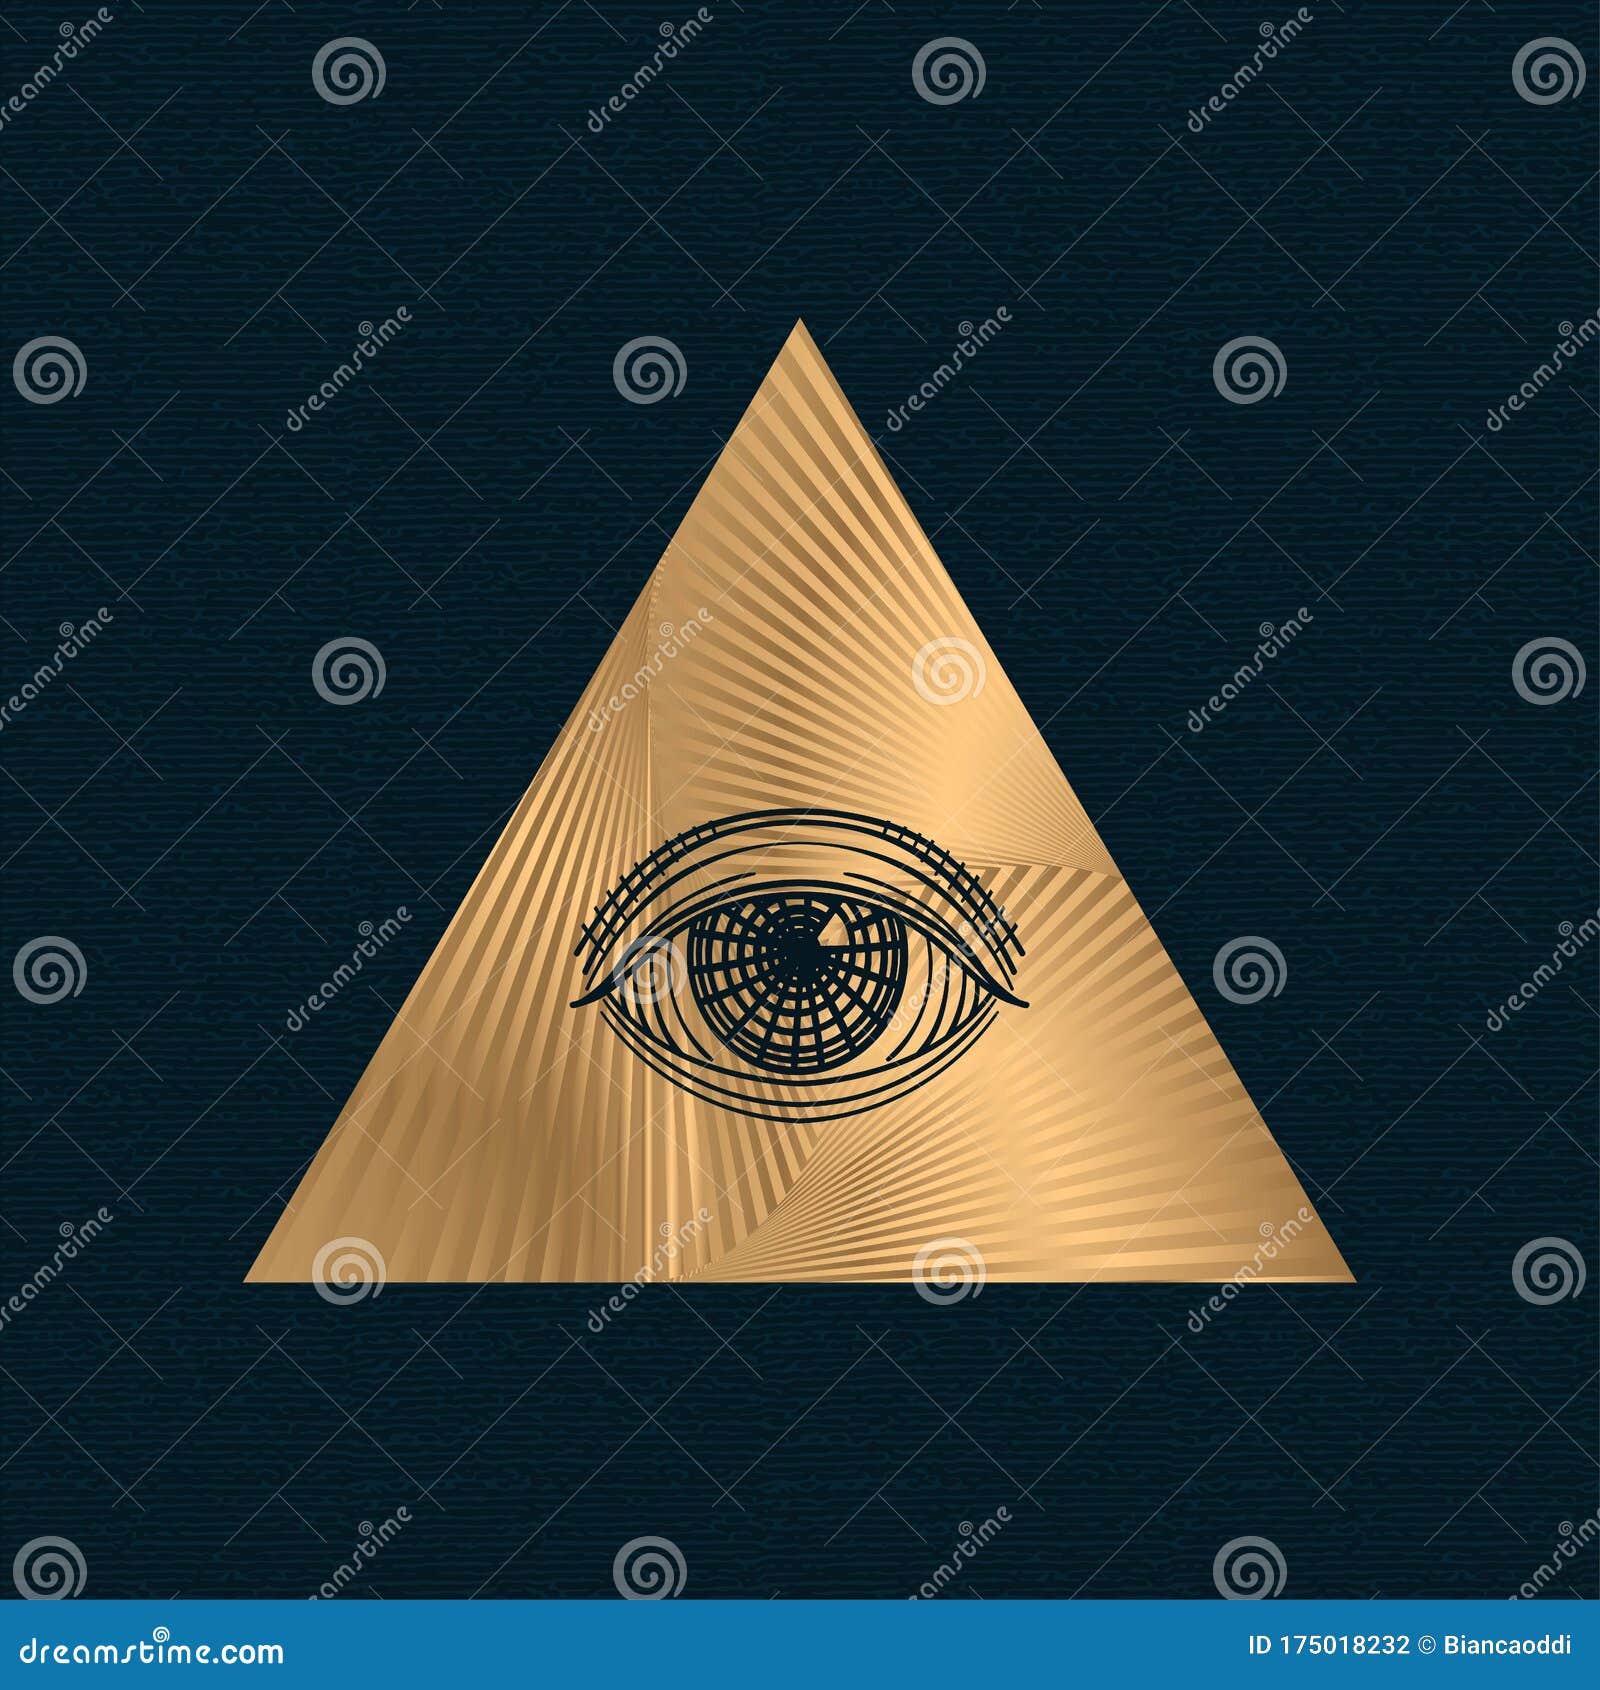 illuminati tattoo third eye by moe barjawi by moebarjawitattoos on  DeviantArt